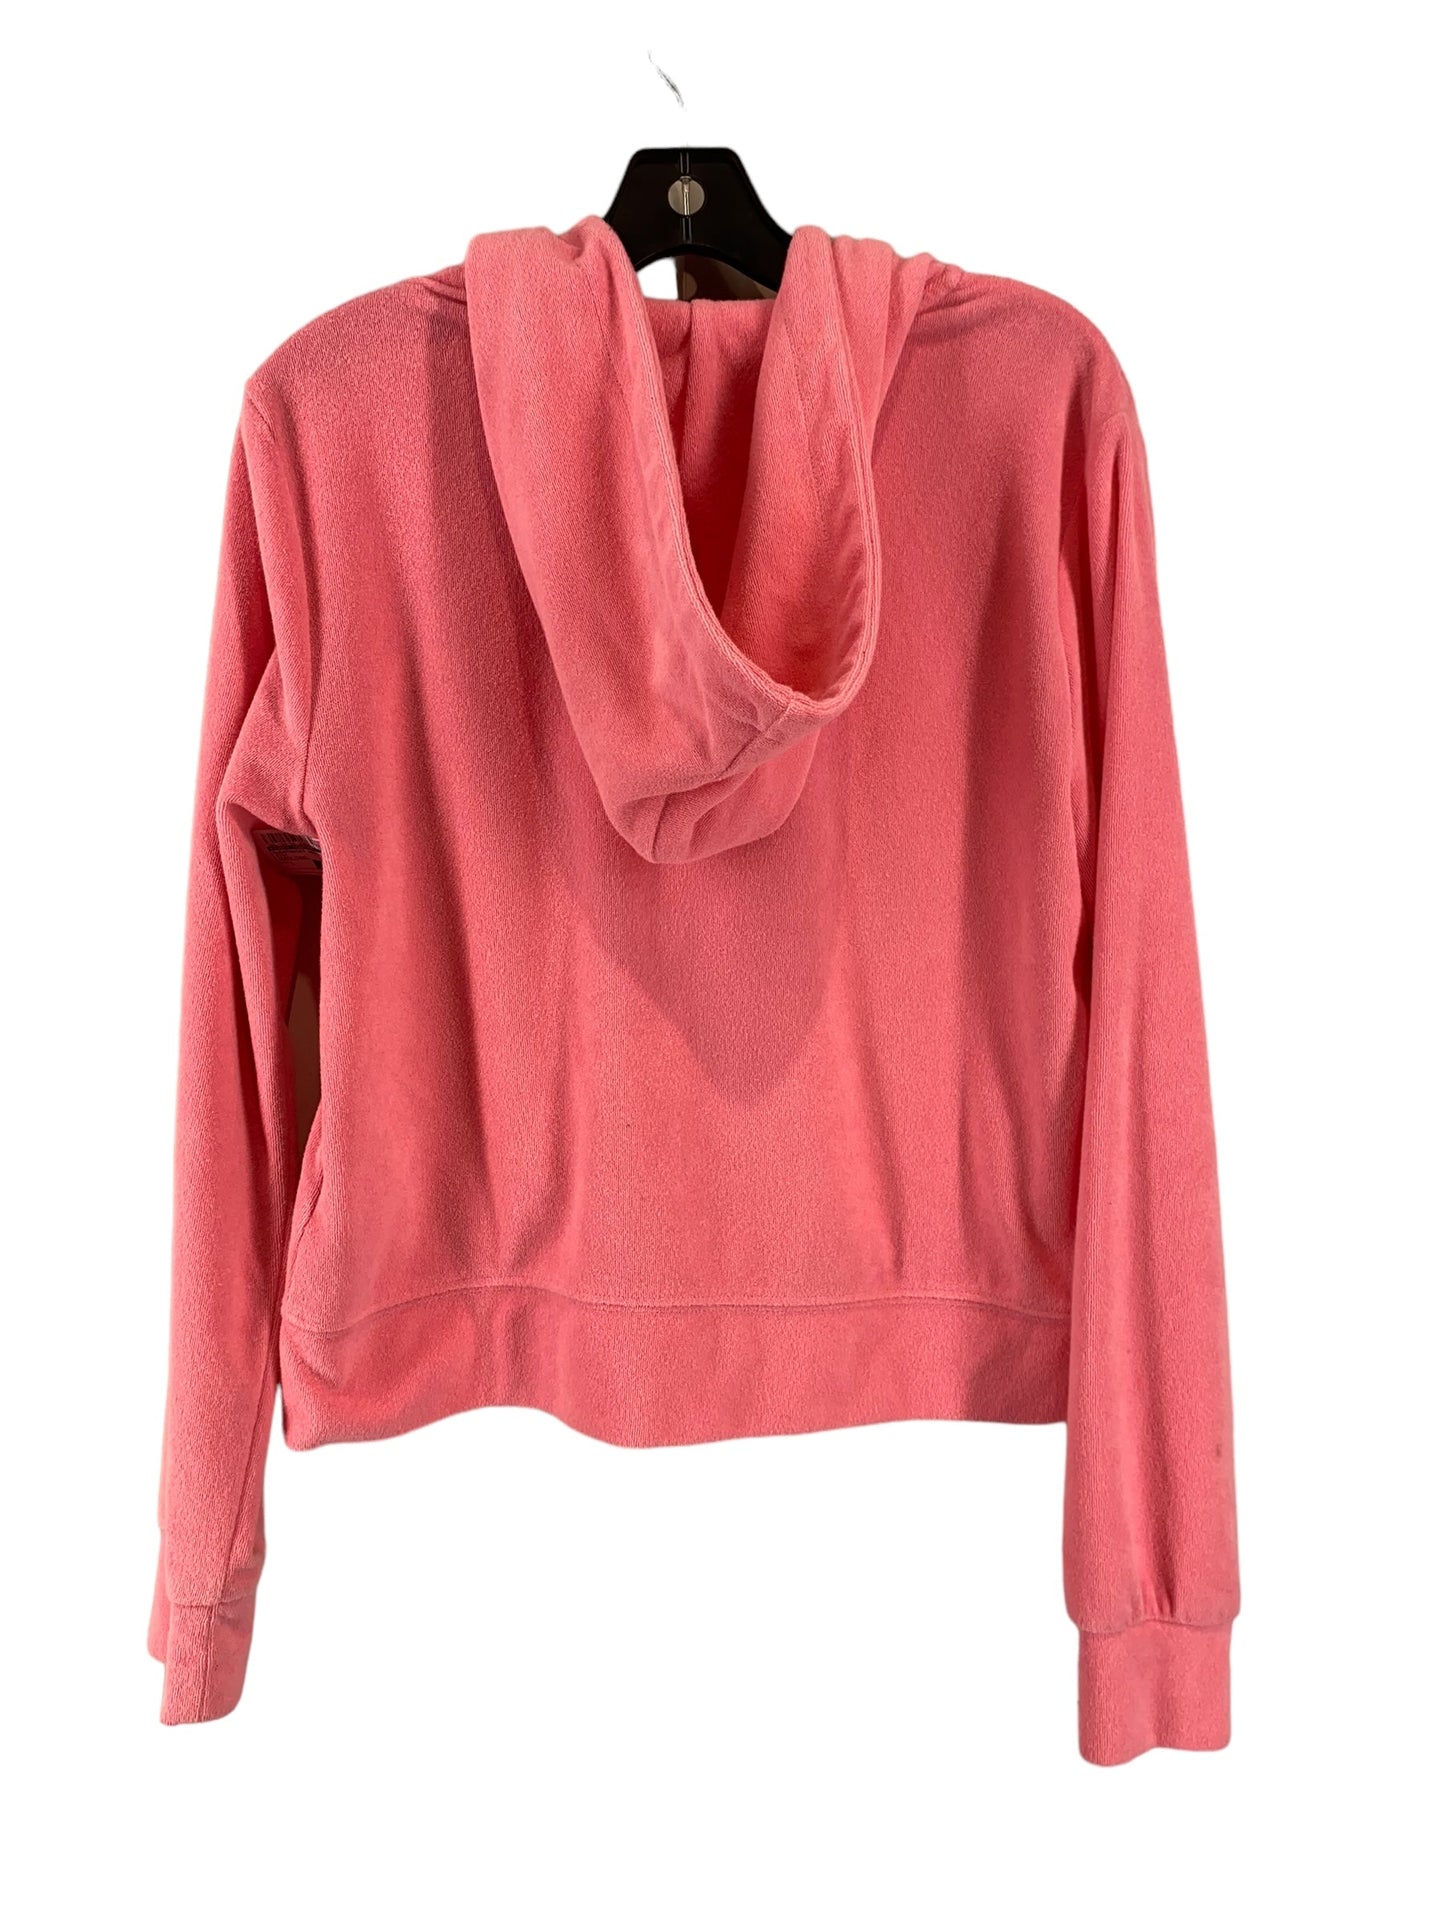 Sweatshirt Hoodie By Juicy Couture  Size: L